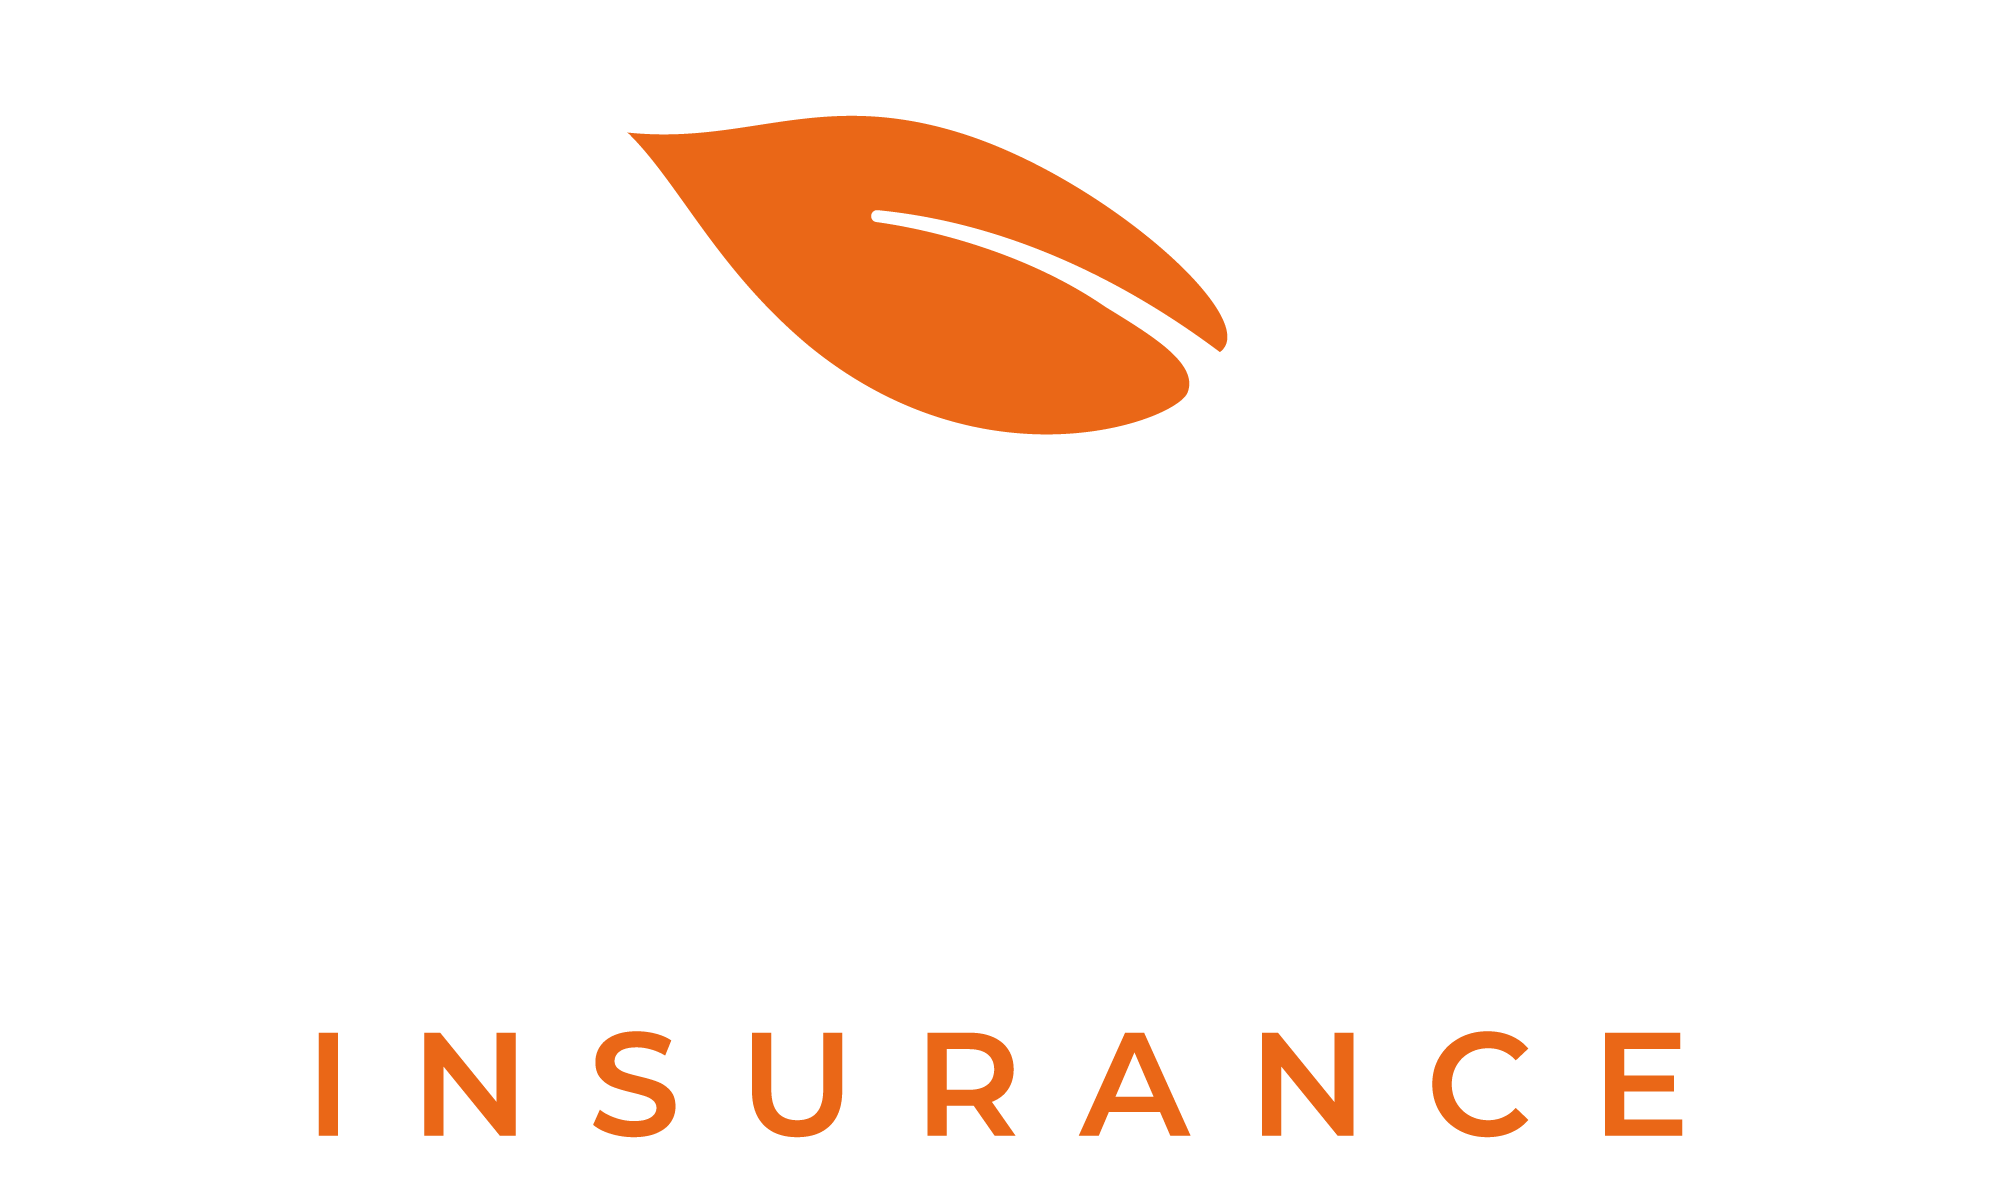 Gordon Insurance